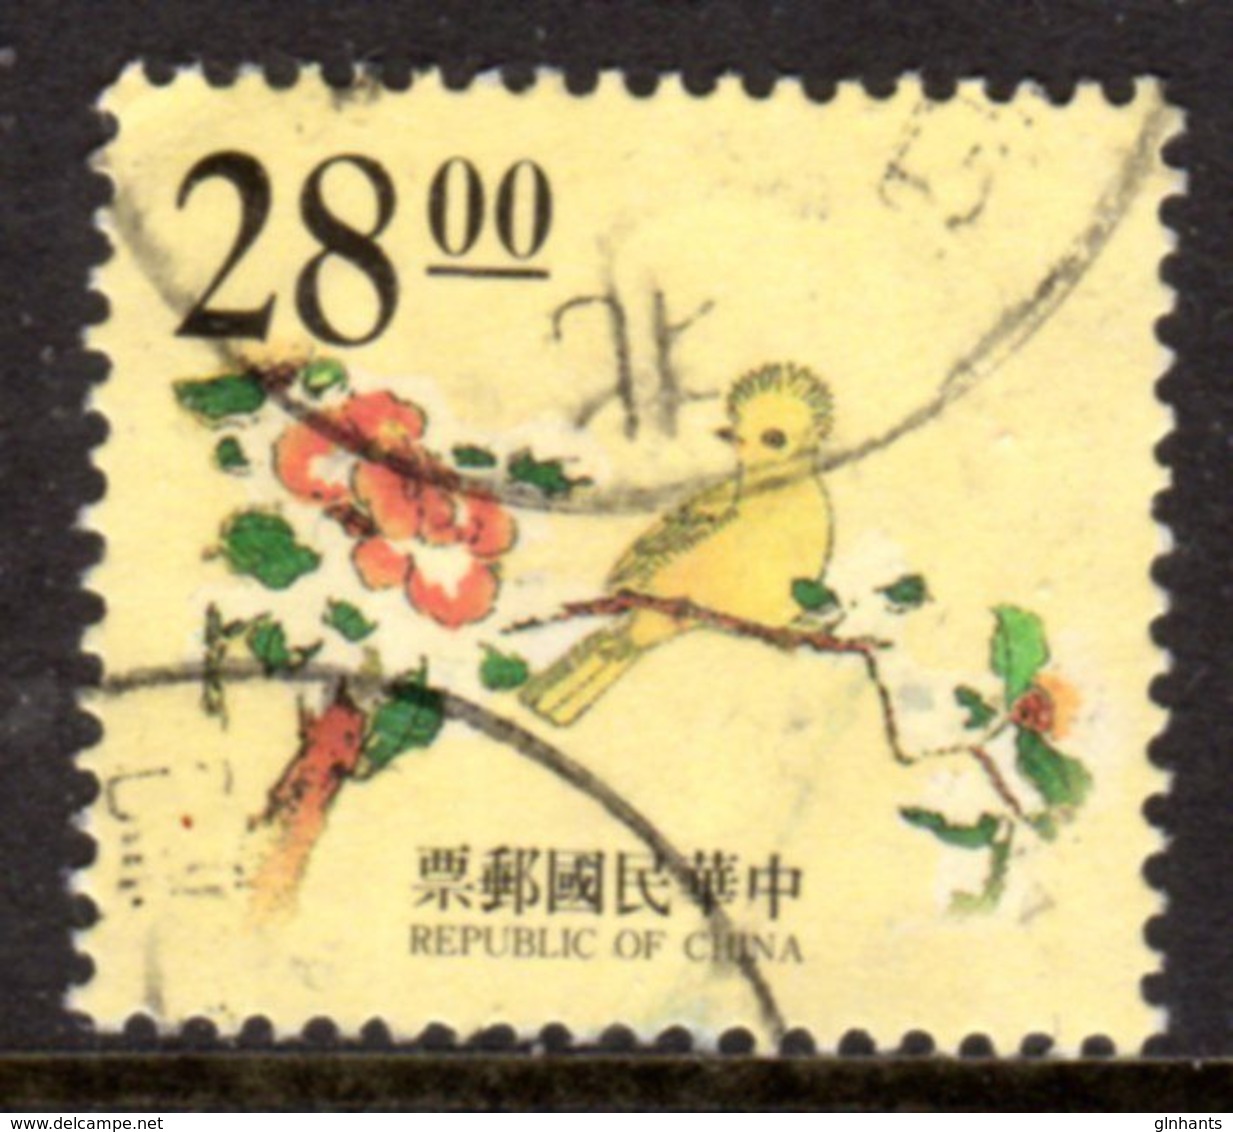 TAIWAN ROC - 1995 ENGRAVINGS YELLOW BIRDS $28 STAMP FINE USED SG 2267 - Usati